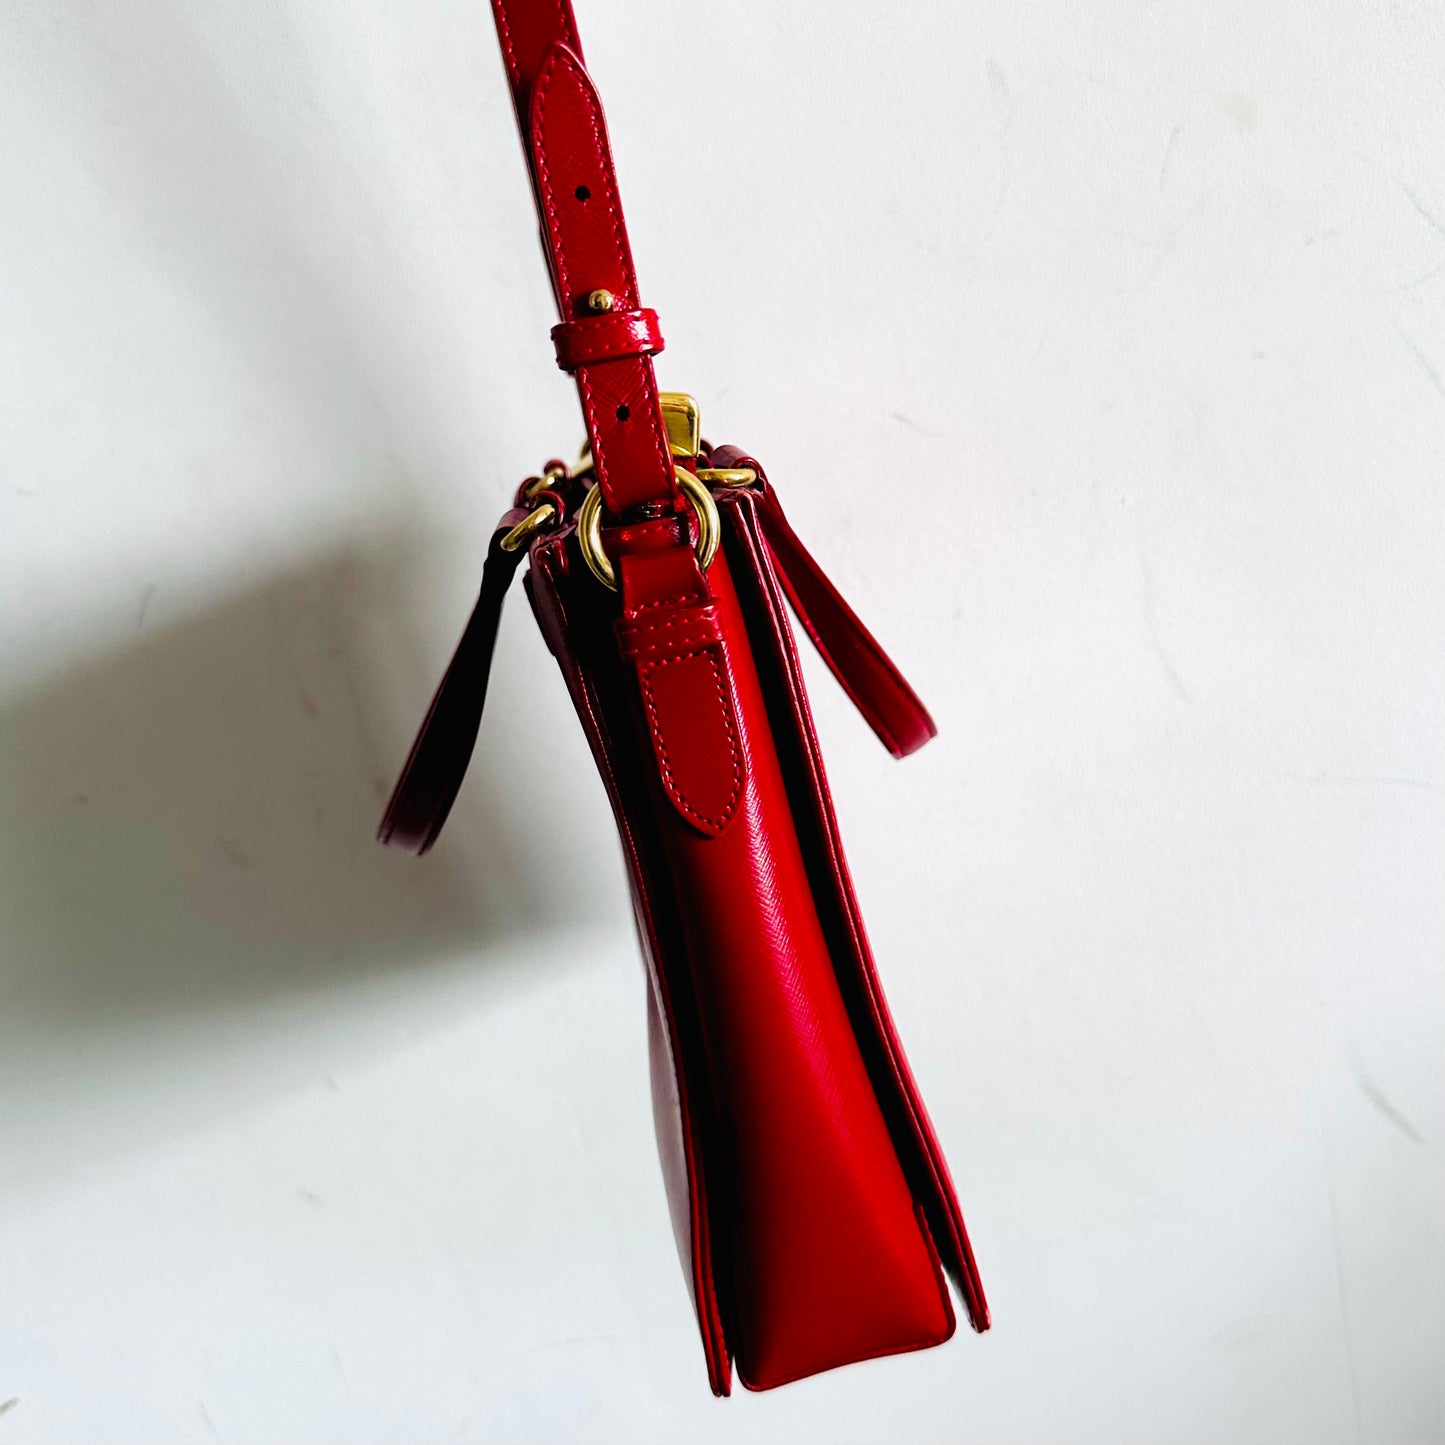 Salvatore Ferragamo Cherry Red GHW Vara Bow Saffiano Leather 2-Way Top Handle Shoulder Sling Bag